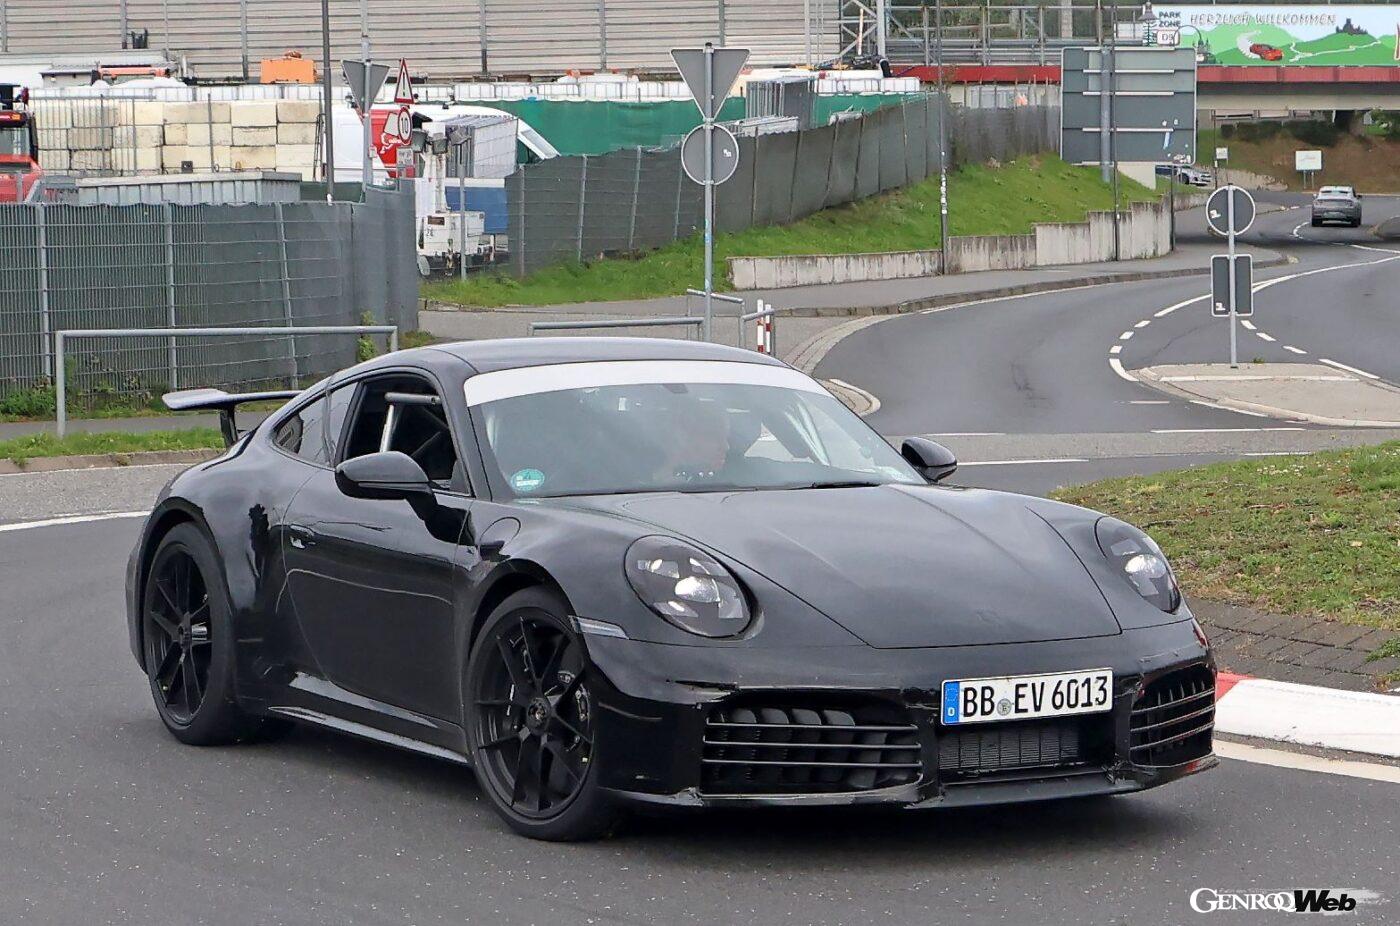 911 GTSのフェイスリフトと思われるテスト車両がニュルブルクリンク周辺で走行している姿を捉えた。